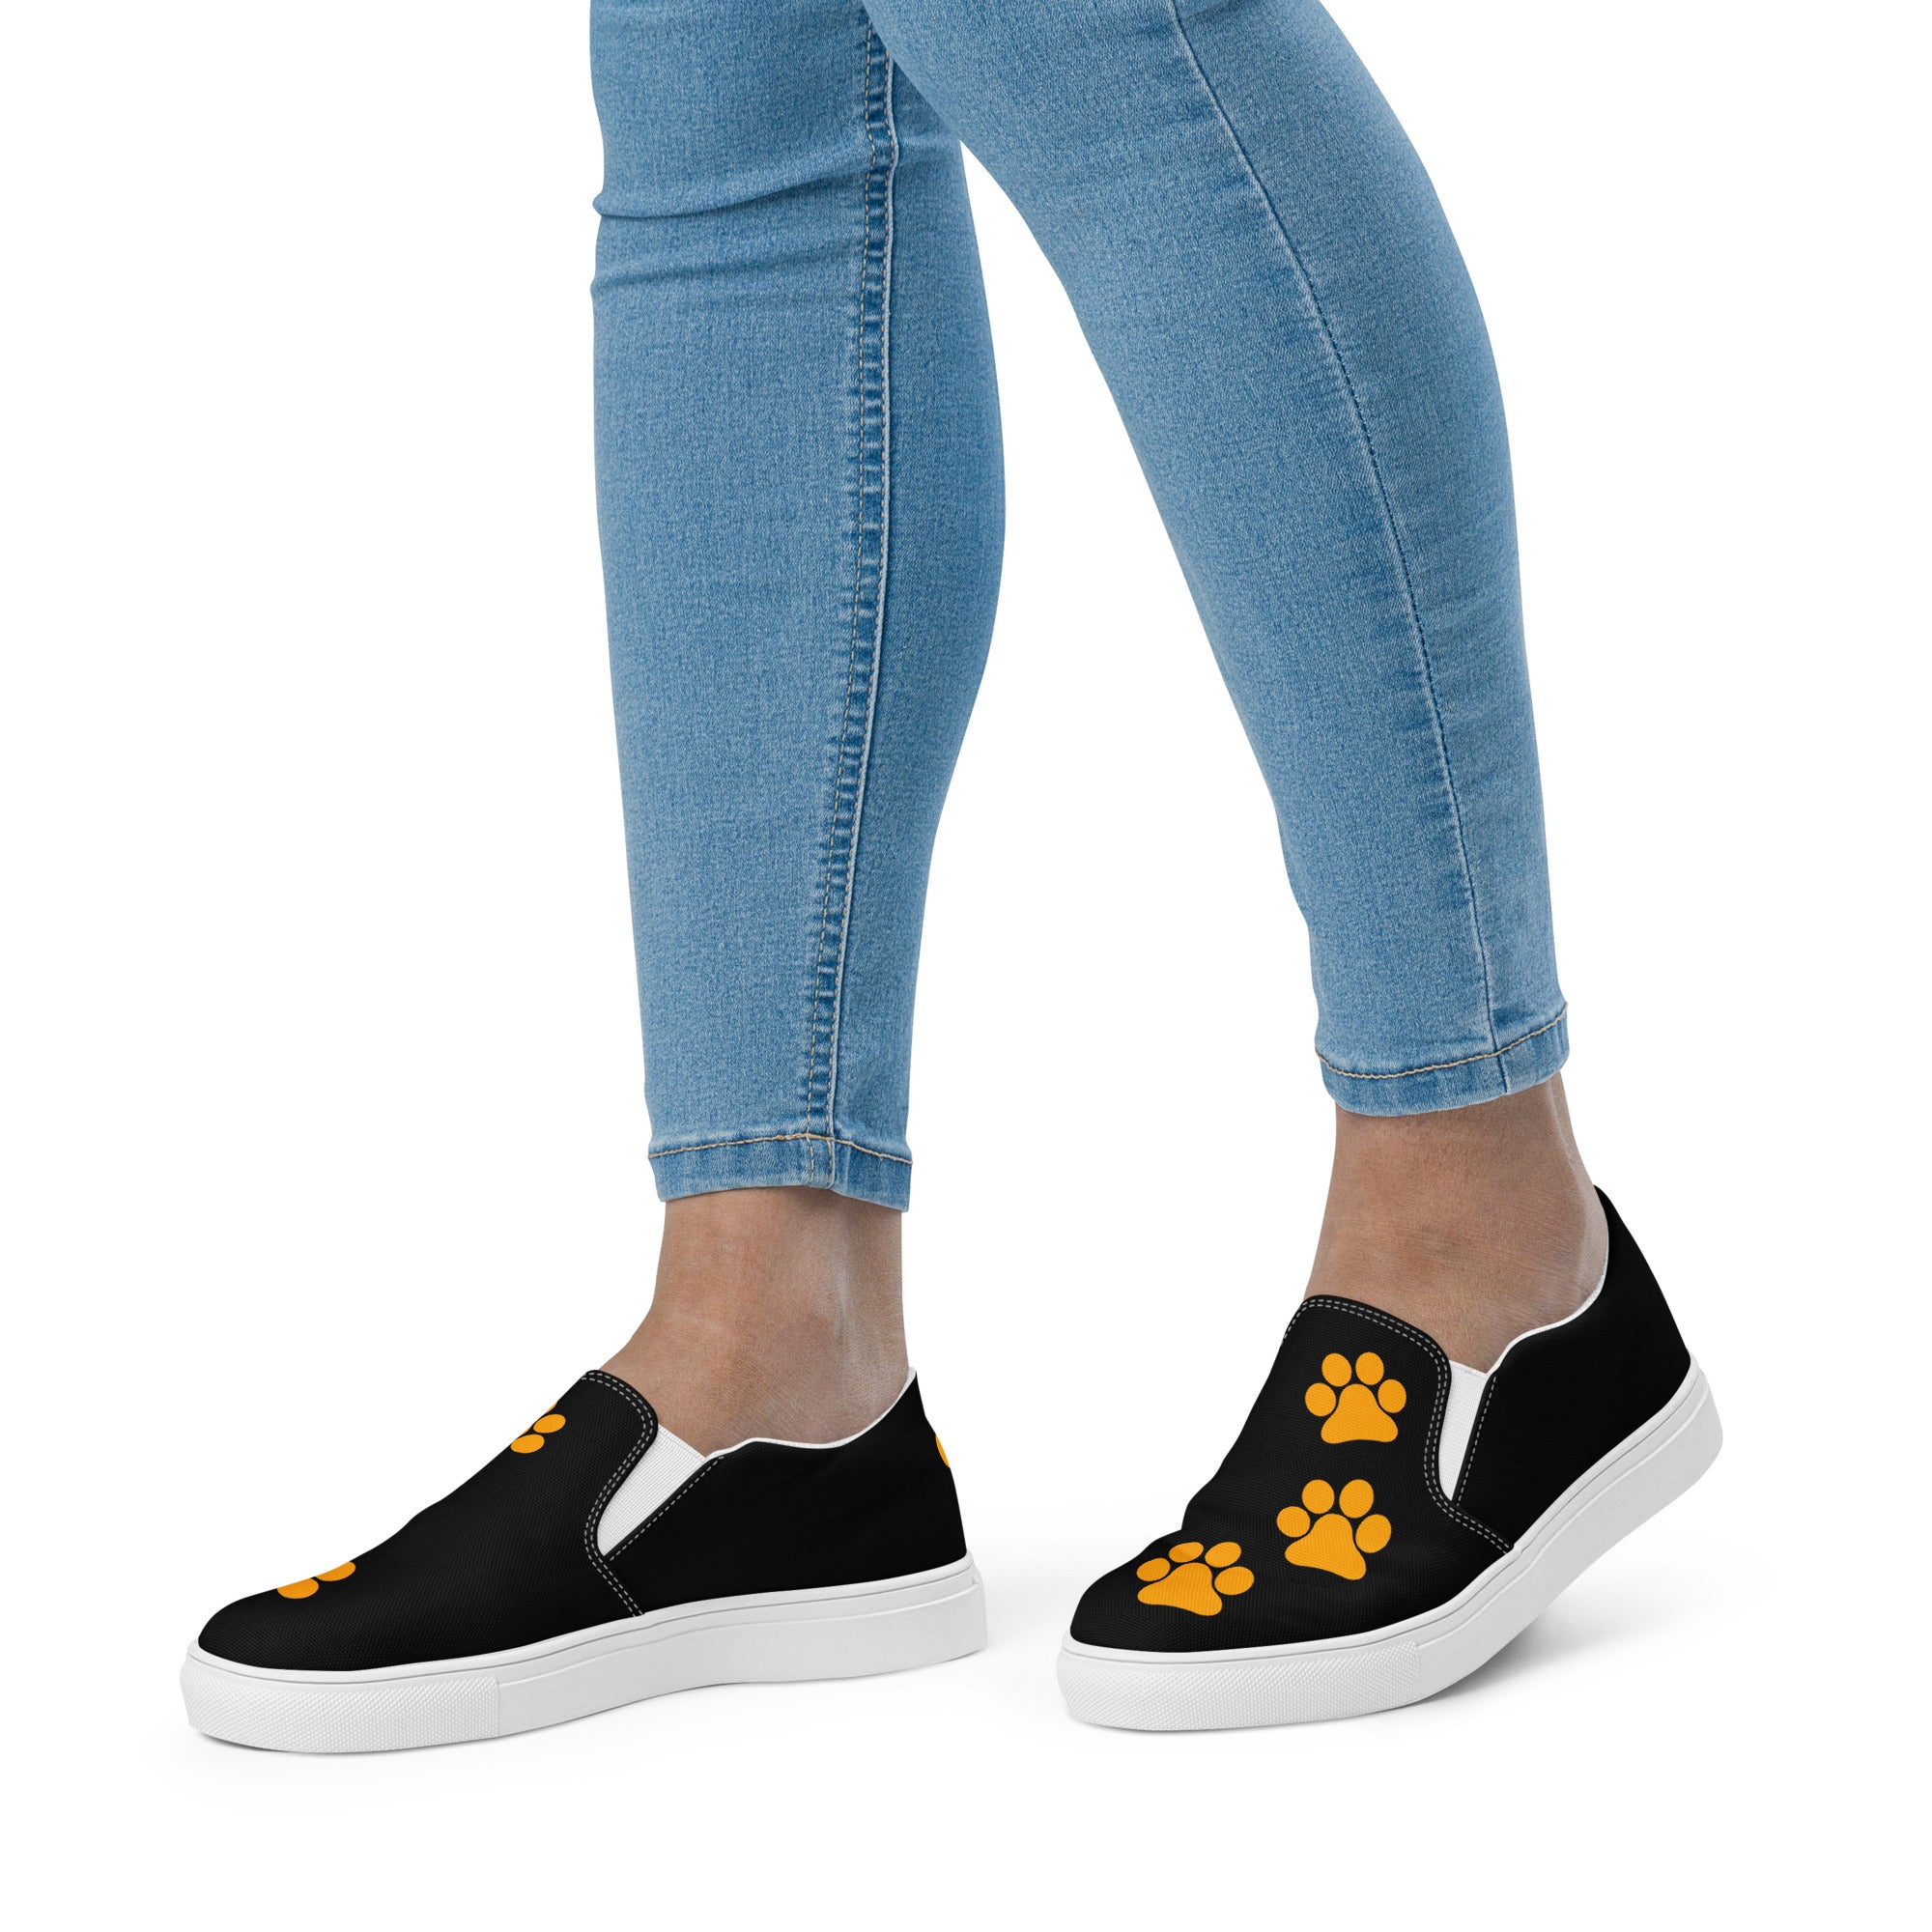 Women’s slip-on Black Orange Paw shoes